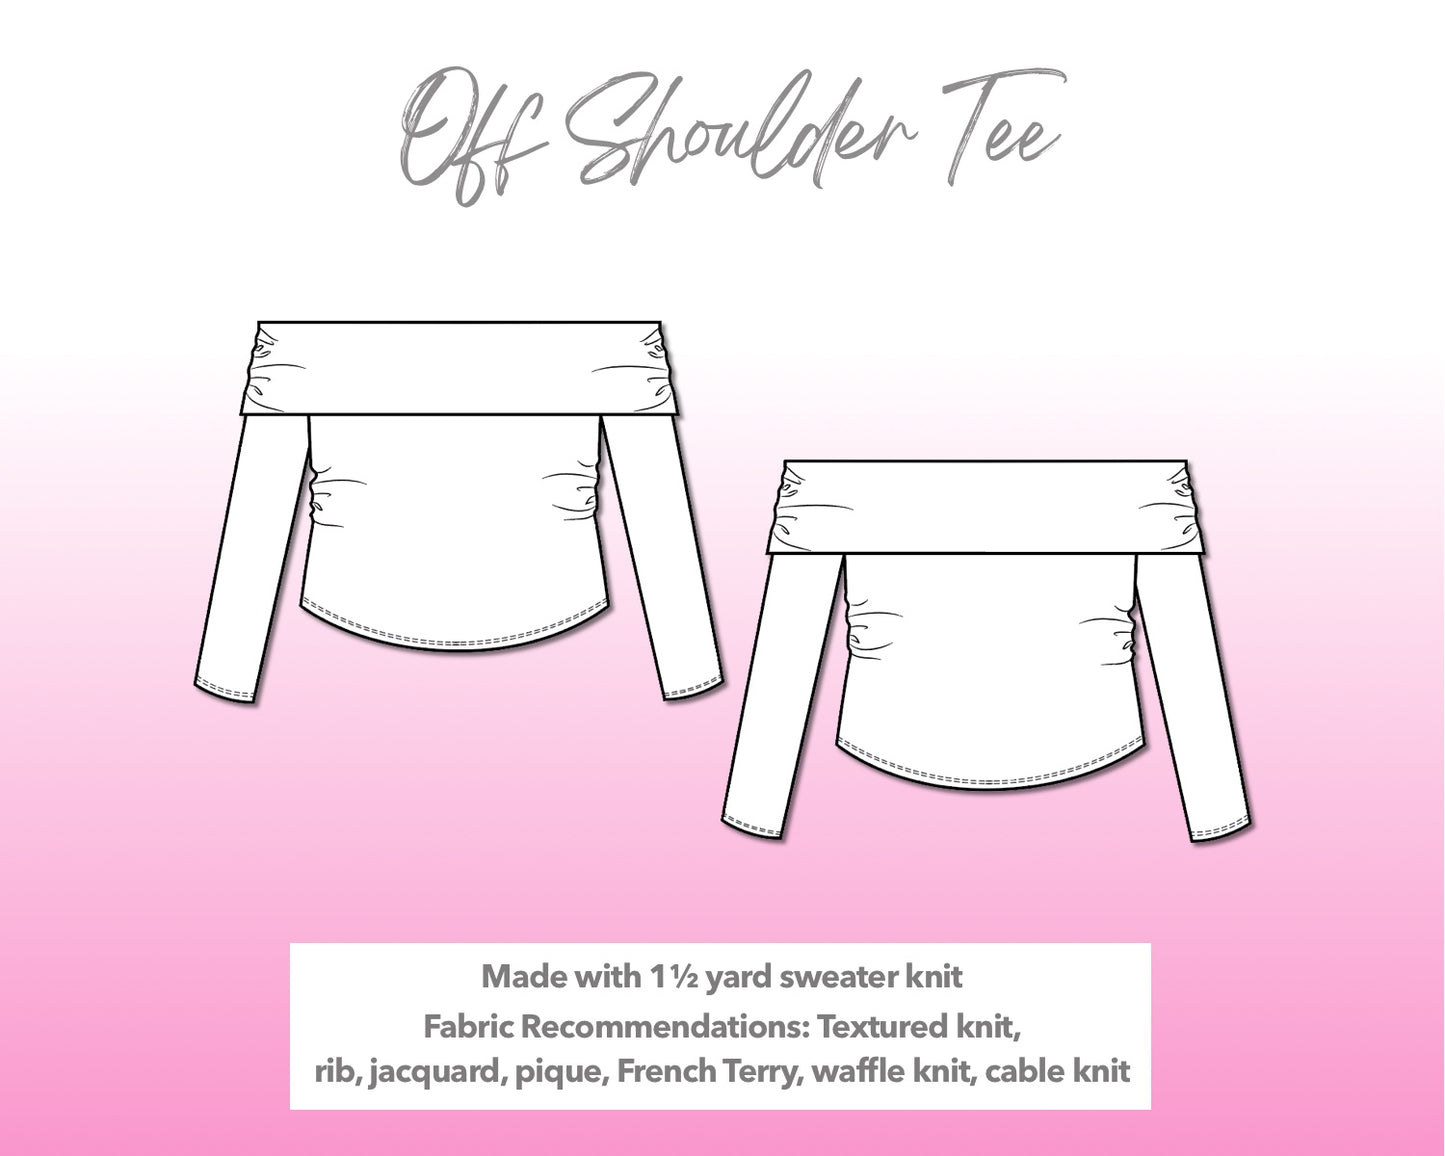 Illustration and detailed description for Off Shoulder Tee sewing pattern.